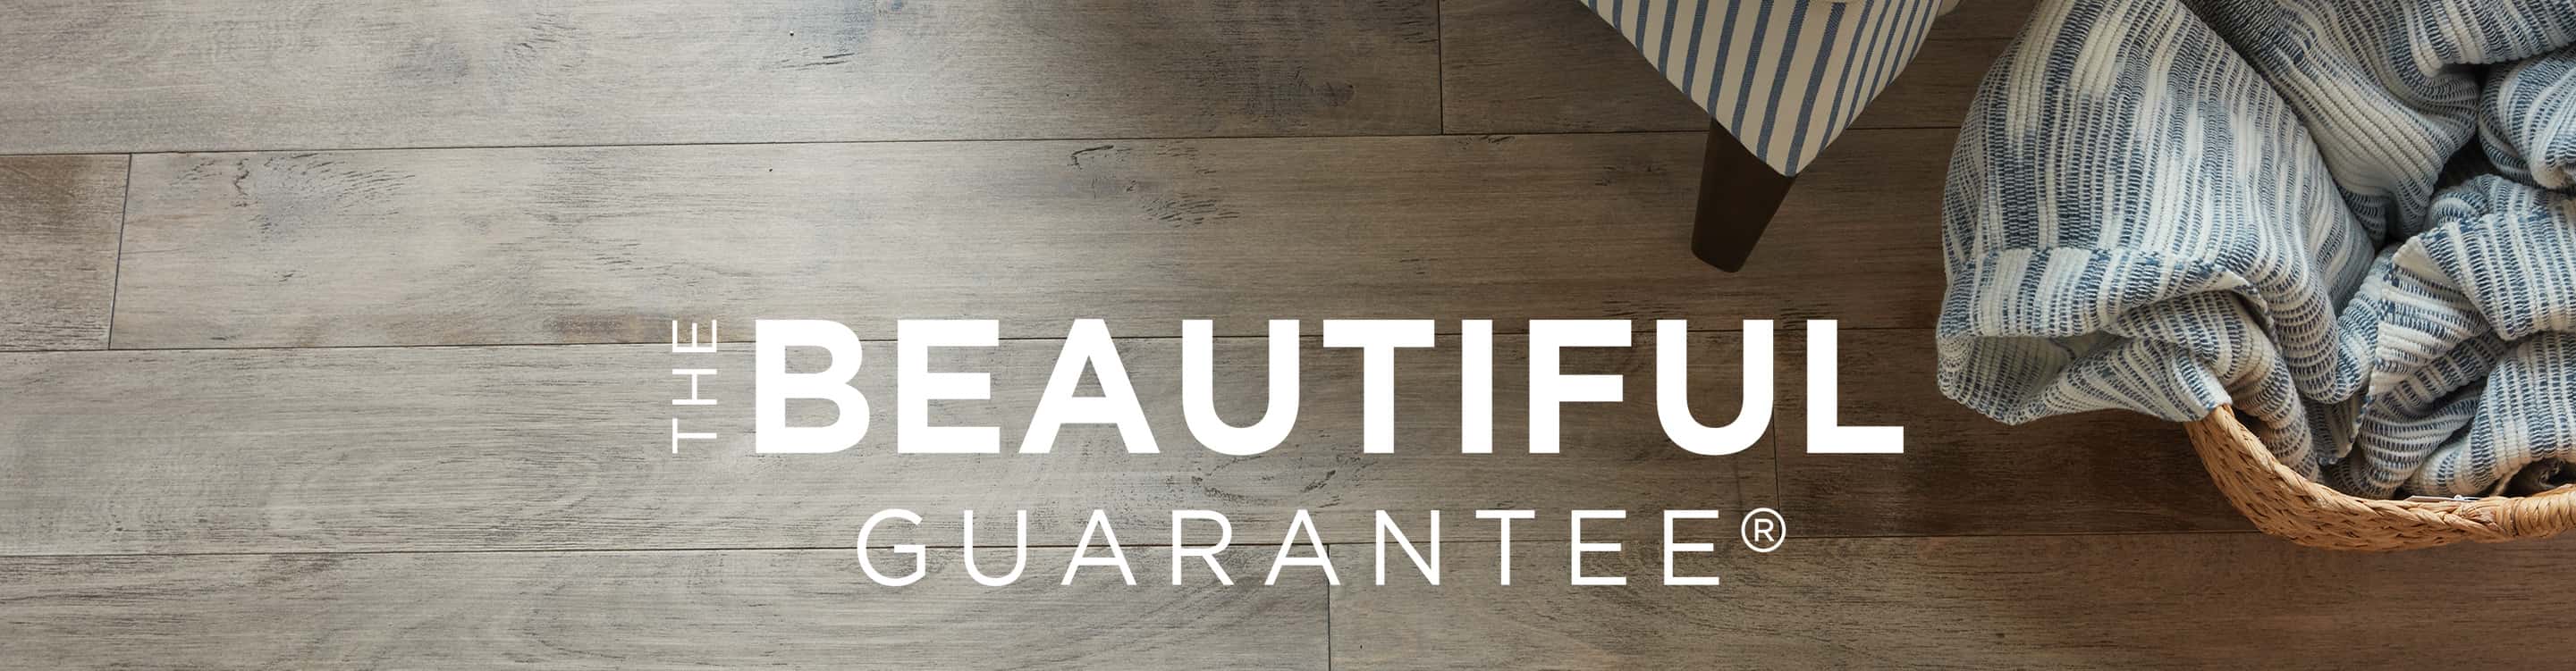 The Beautiful Guarantee flooring warranty logo on a wood floor background